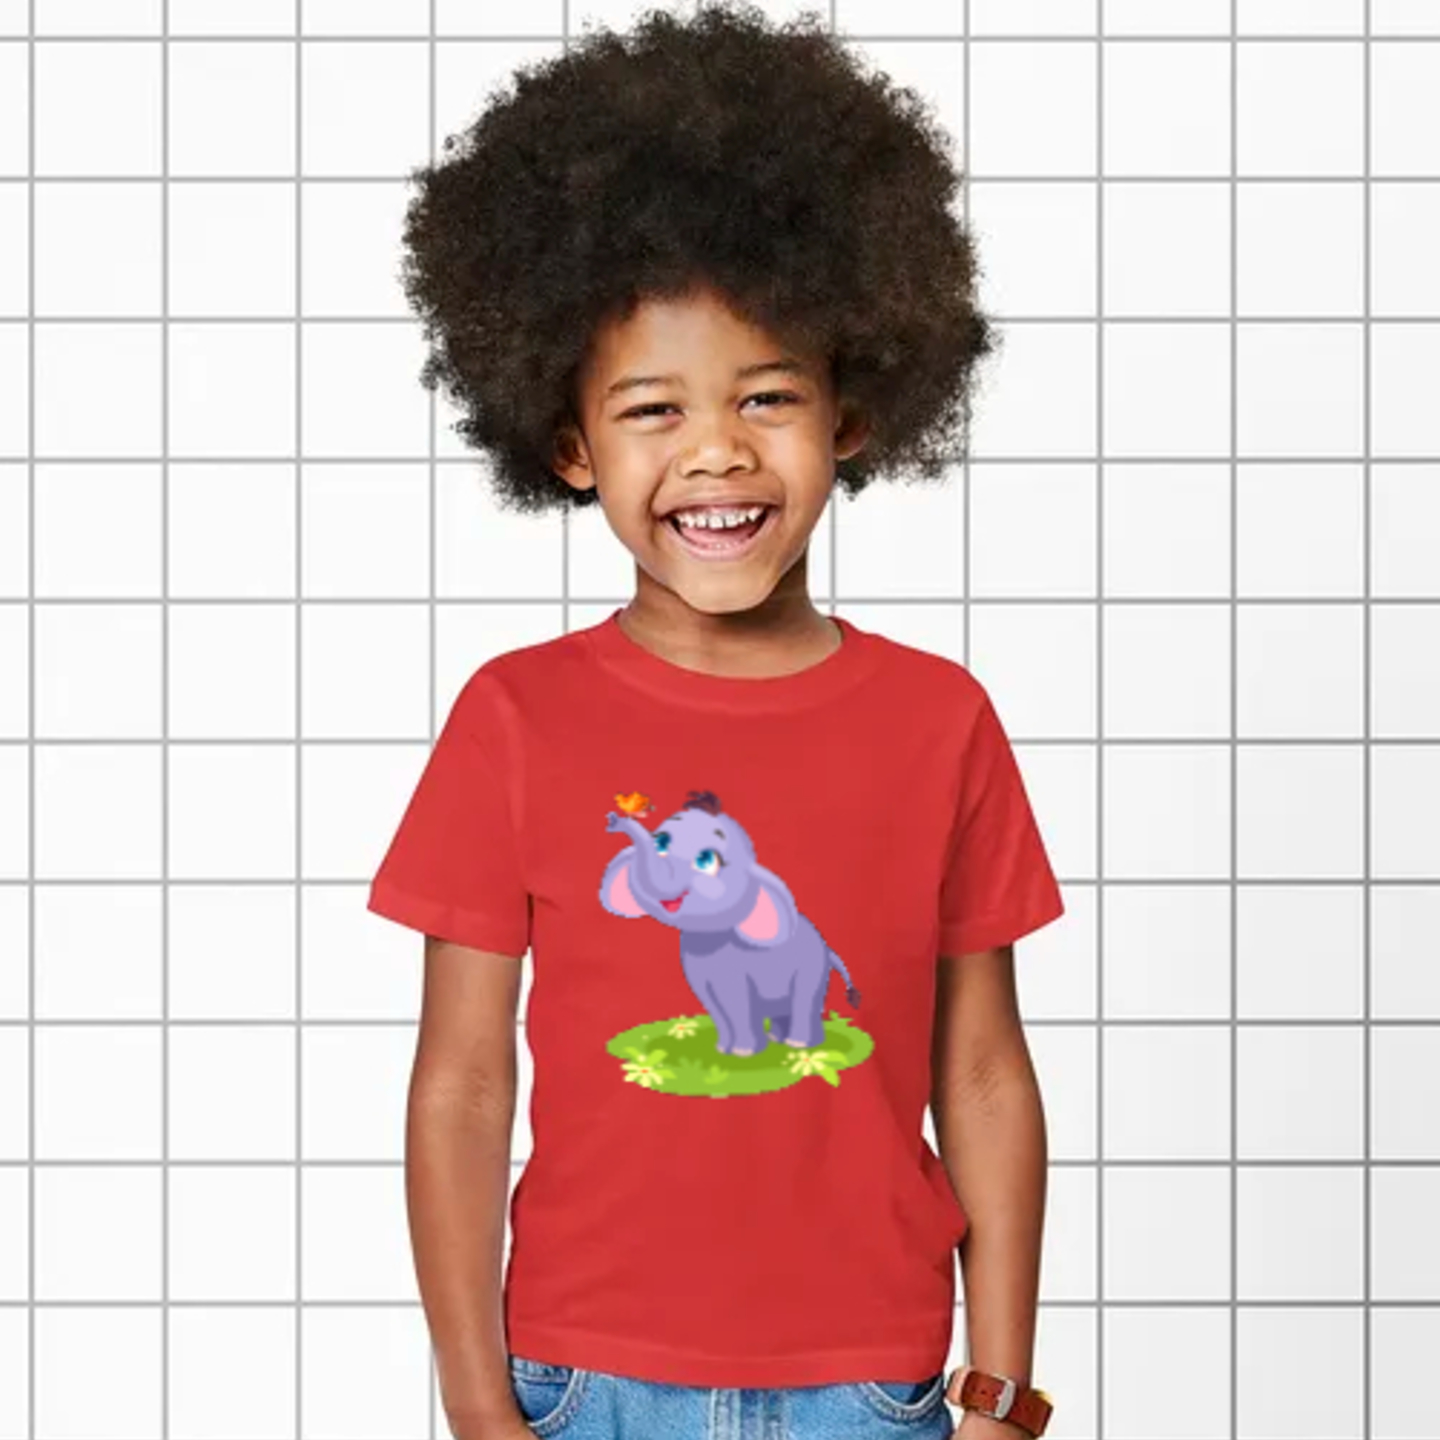 Cute Elephant Printed T-Shirts For Boys